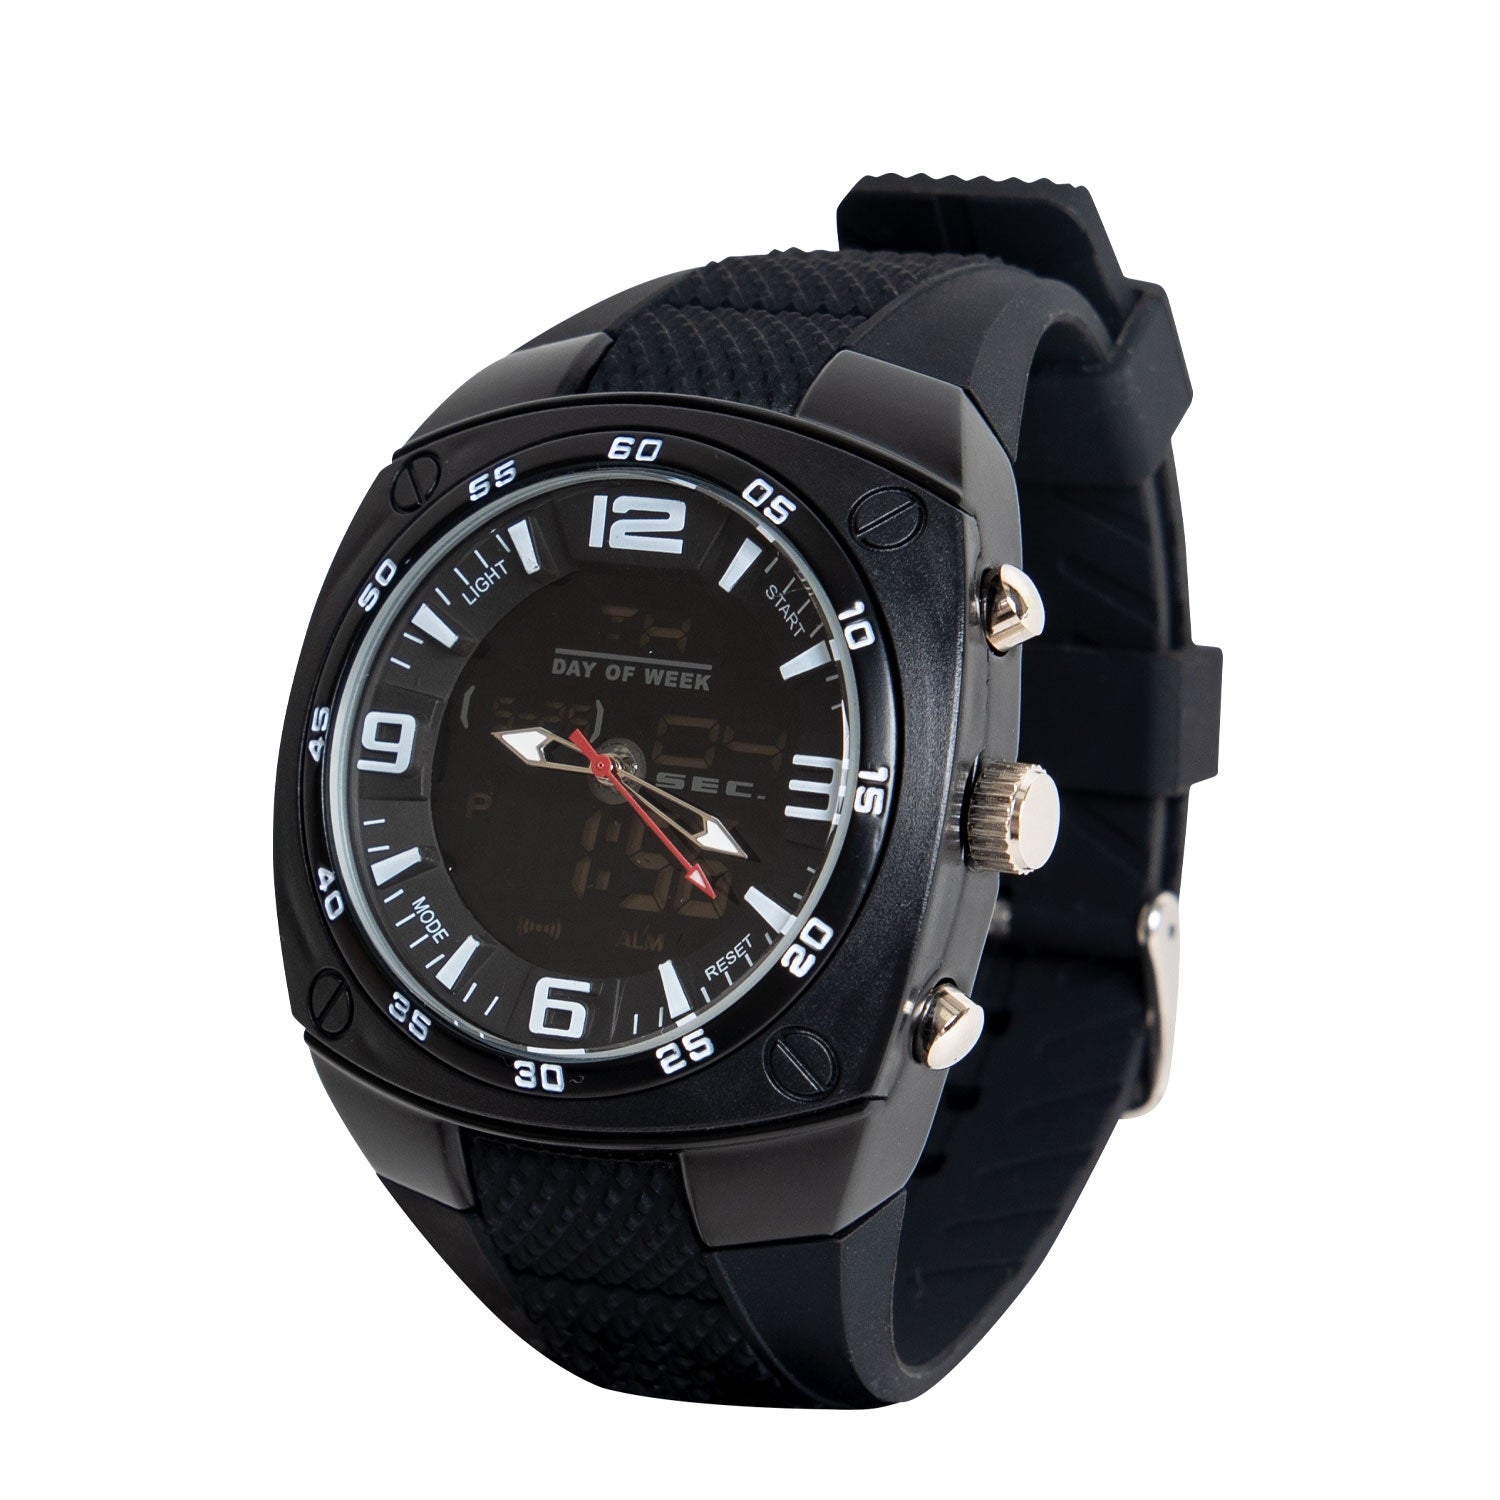 Rothco XLarge Military Style Analog & Digital Display Watch Black